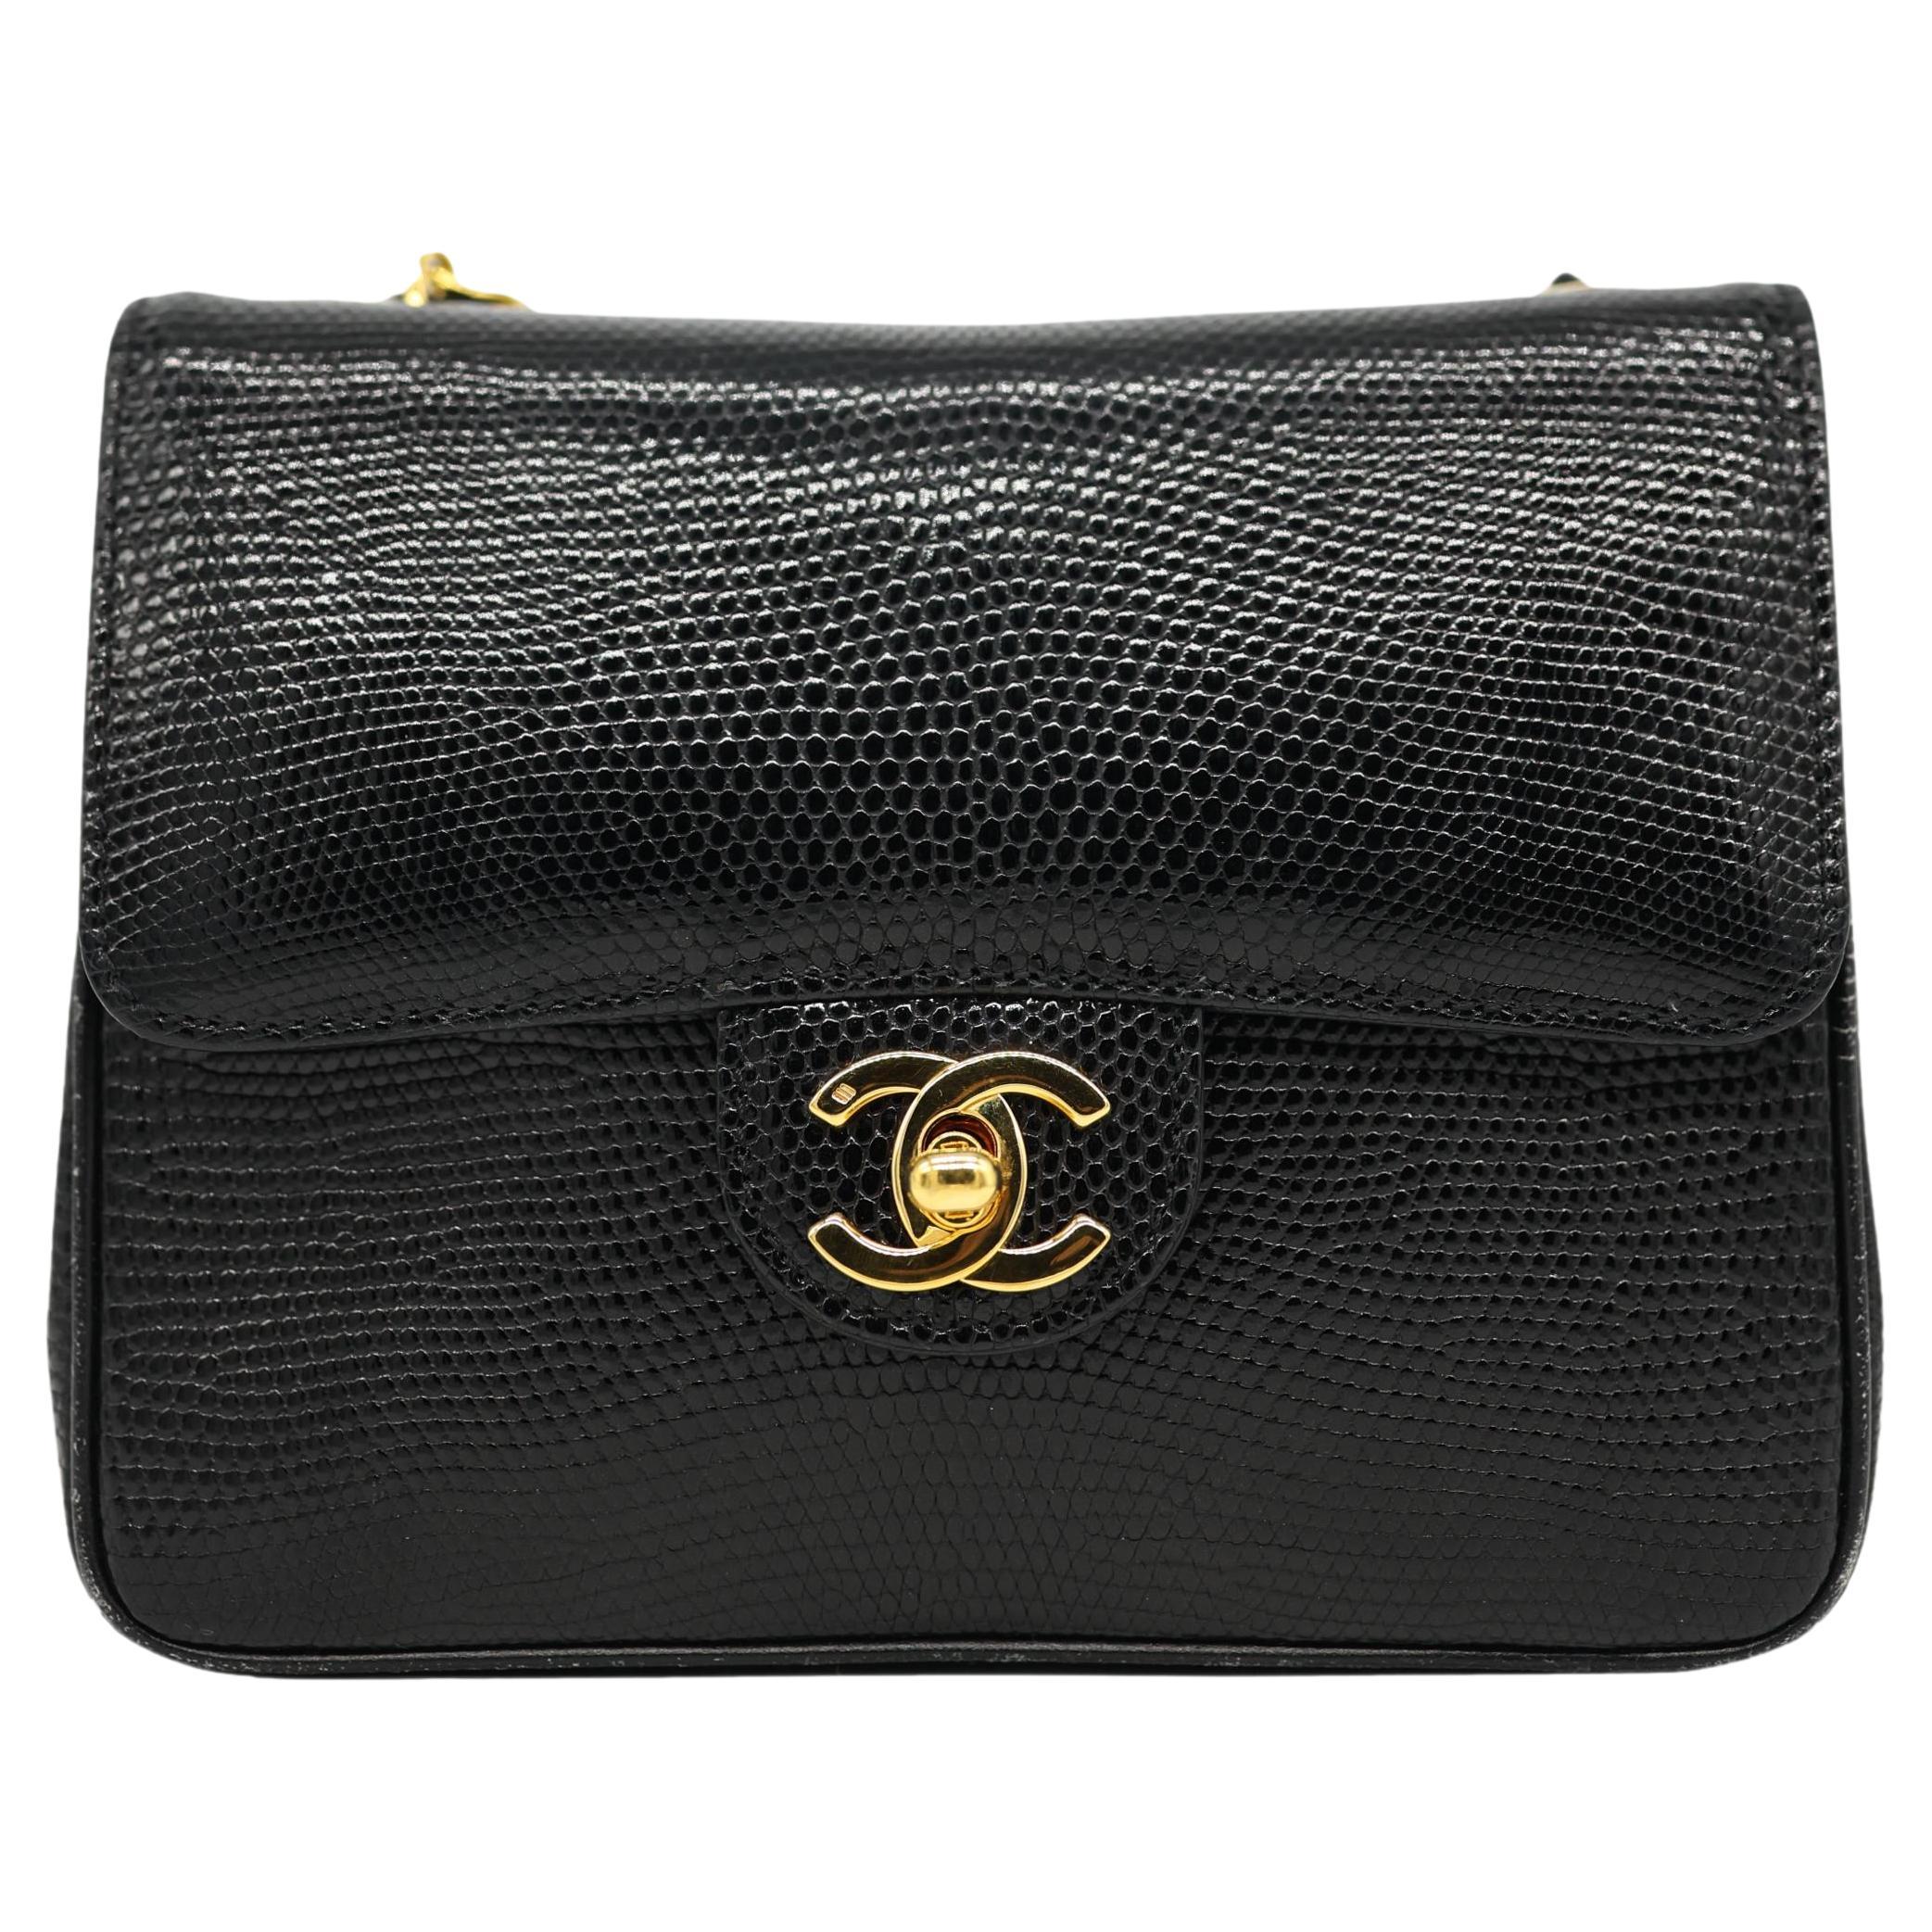 Chanel Vintage Mini Black Lizard Envelope Cross Body Flap Bag with Gold Hardware